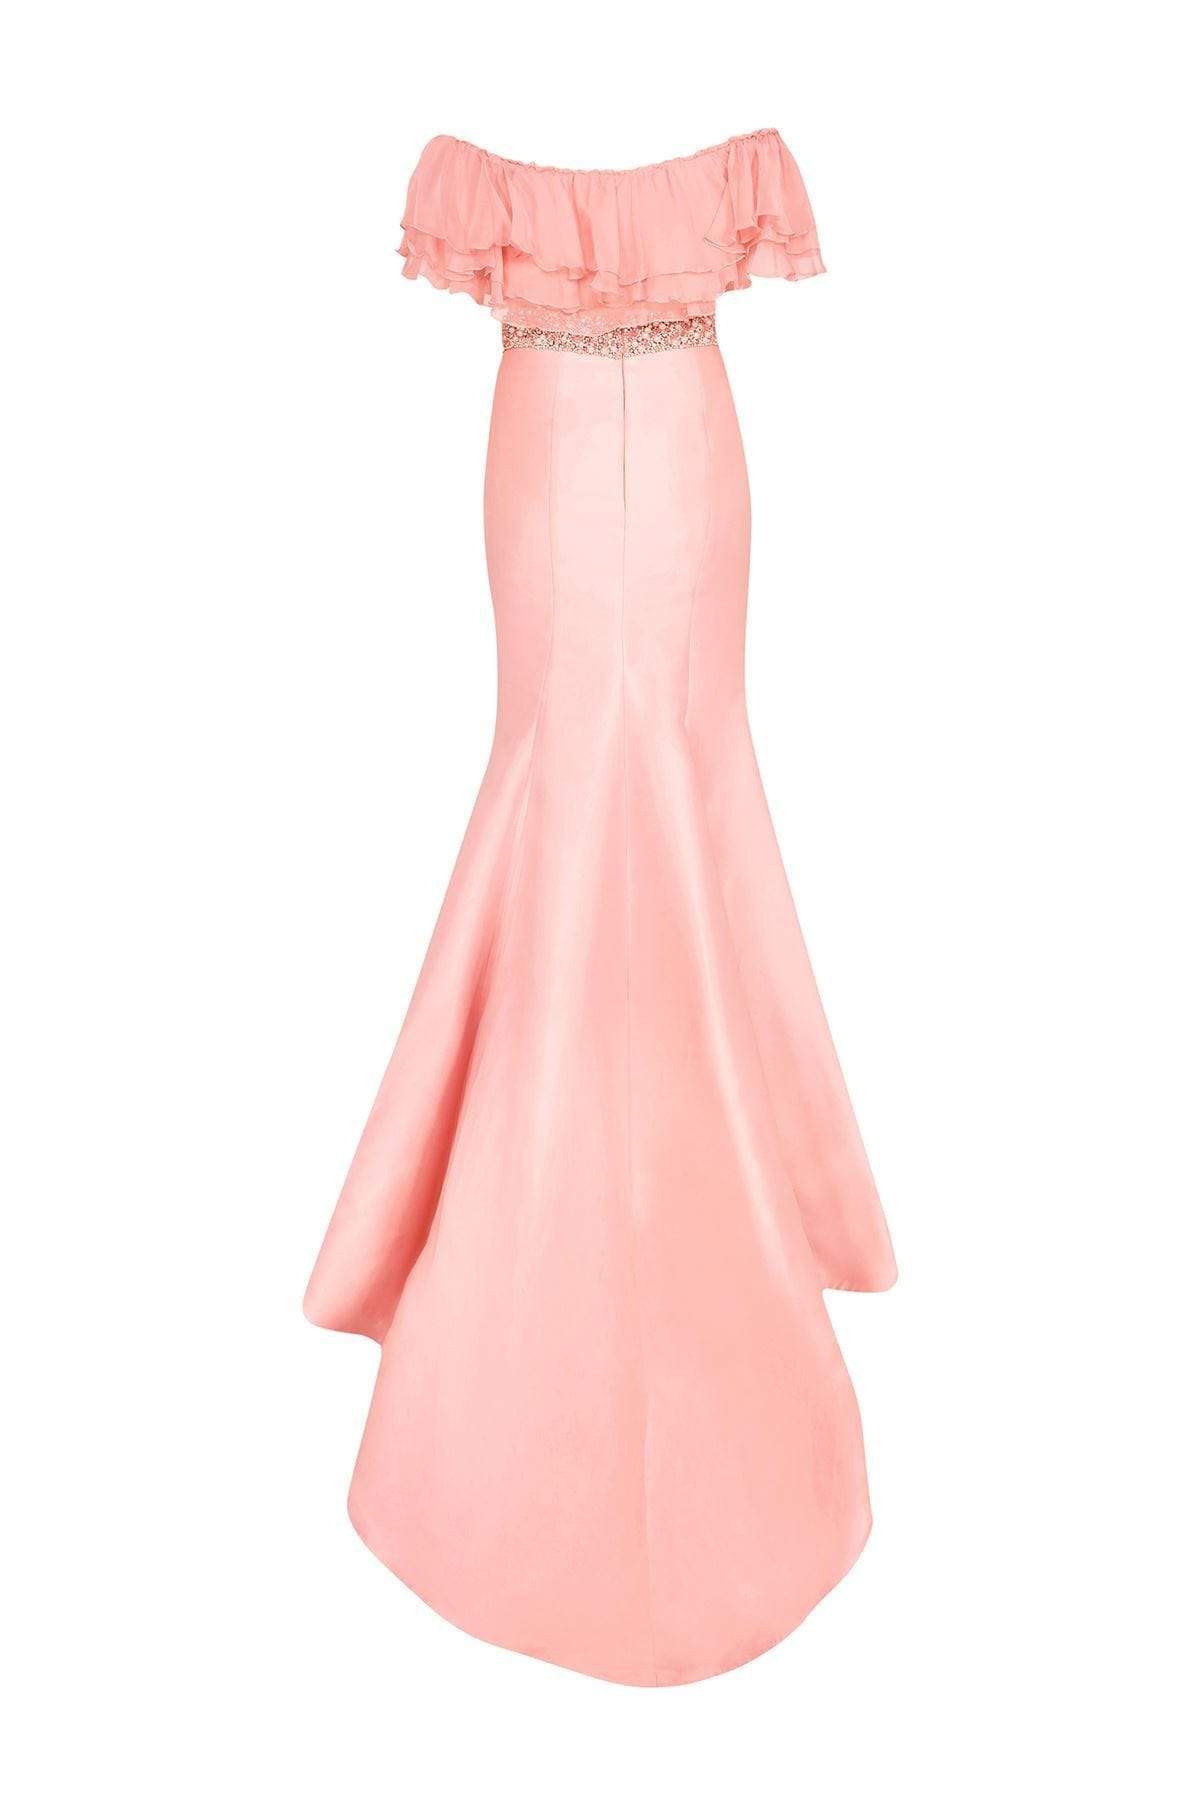 Tarik Ediz - Two-Piece Mermaid Dress 50086 Special Occasion Dress